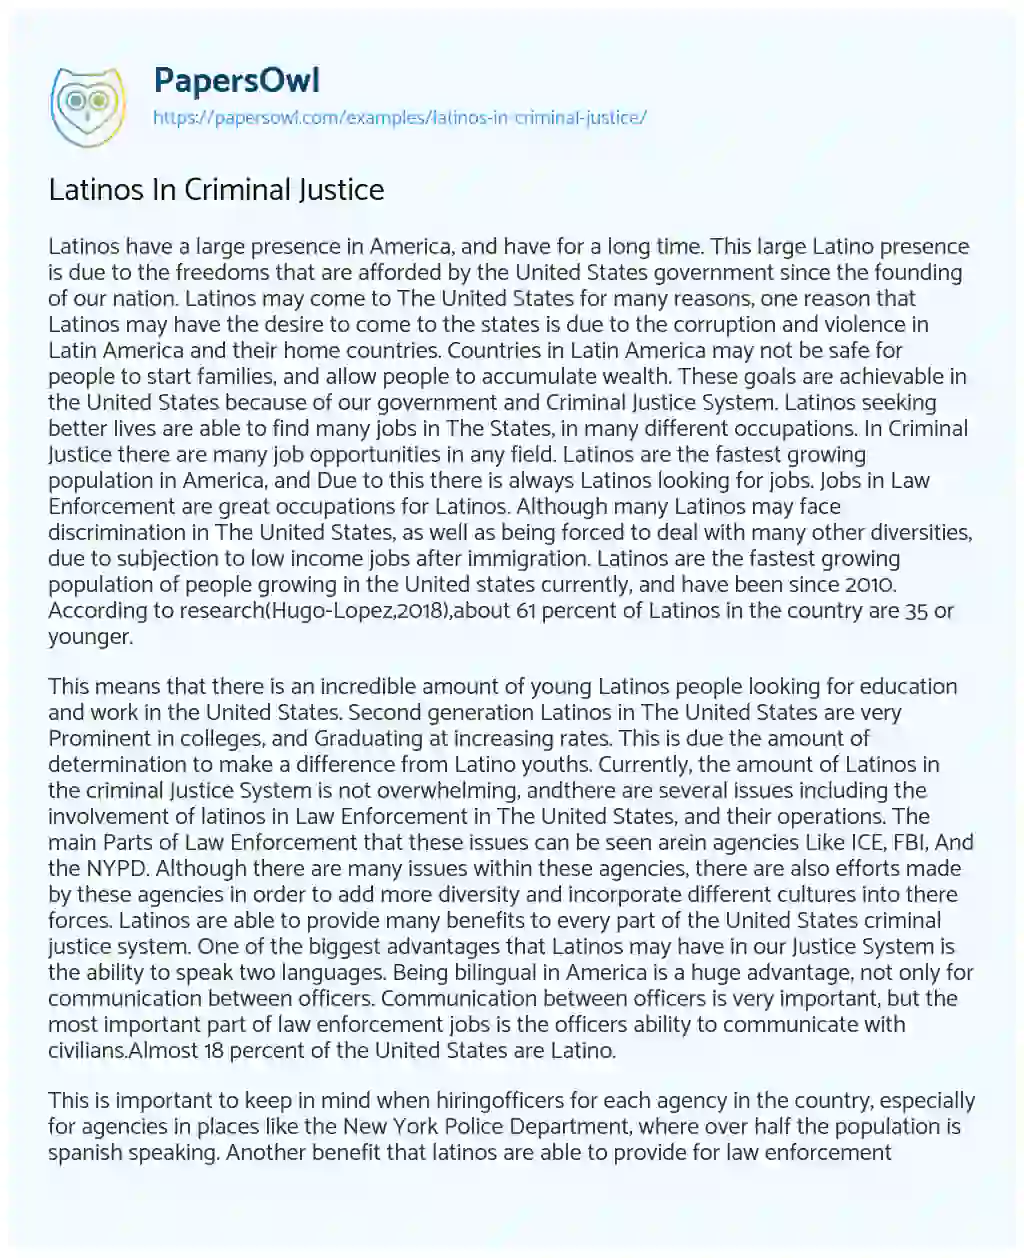 Essay on Latinos in Criminal Justice